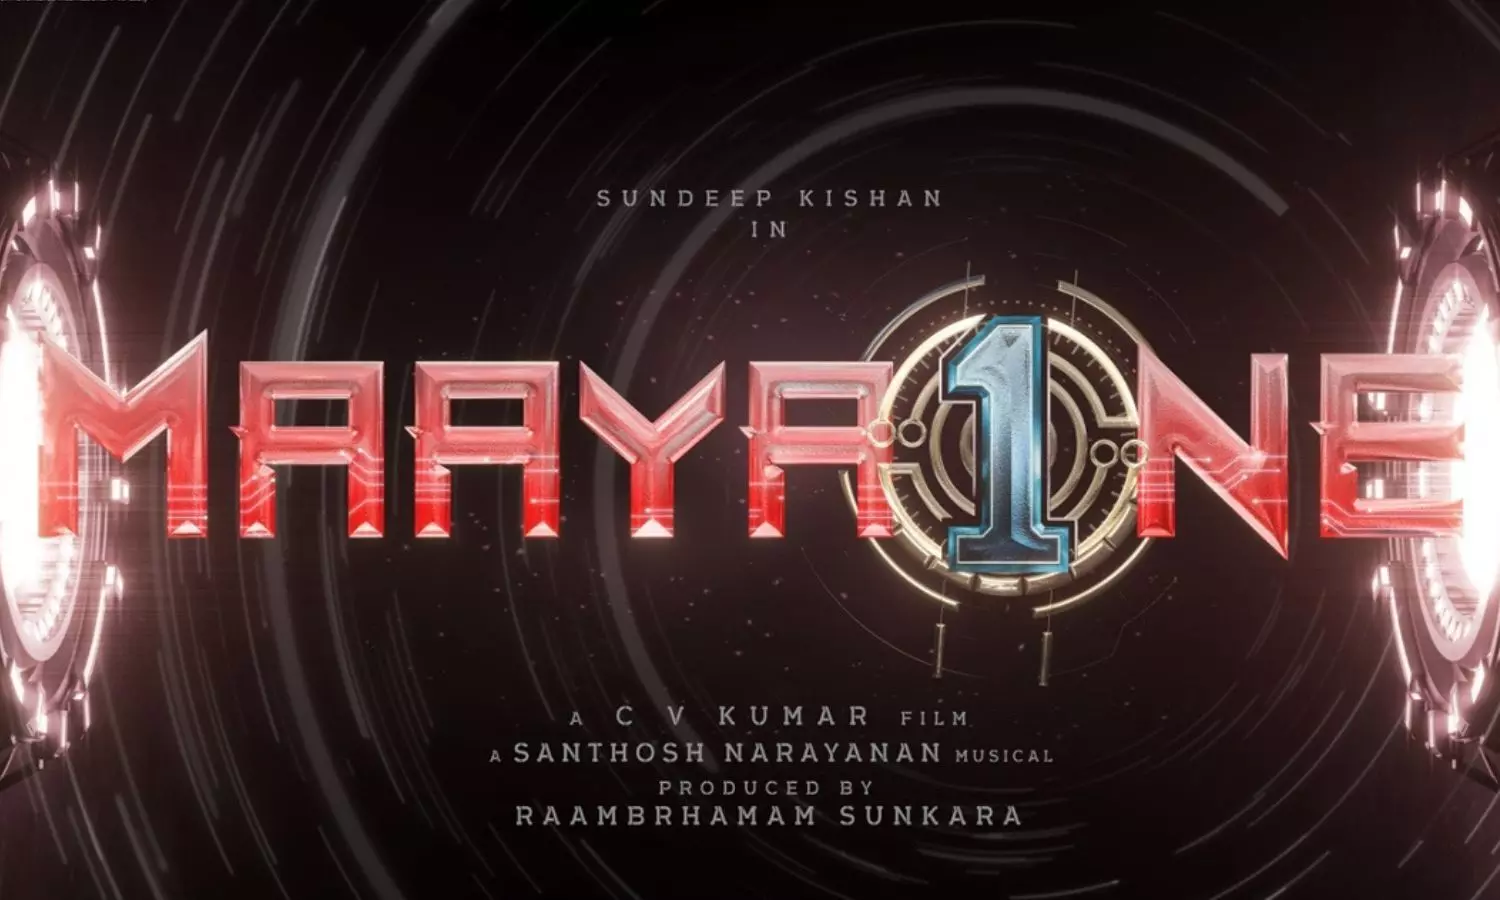 ‘Maayaone’ Teaser: Sundeep Kishan Transforms into a Superhero in Sci-Fi Thriller